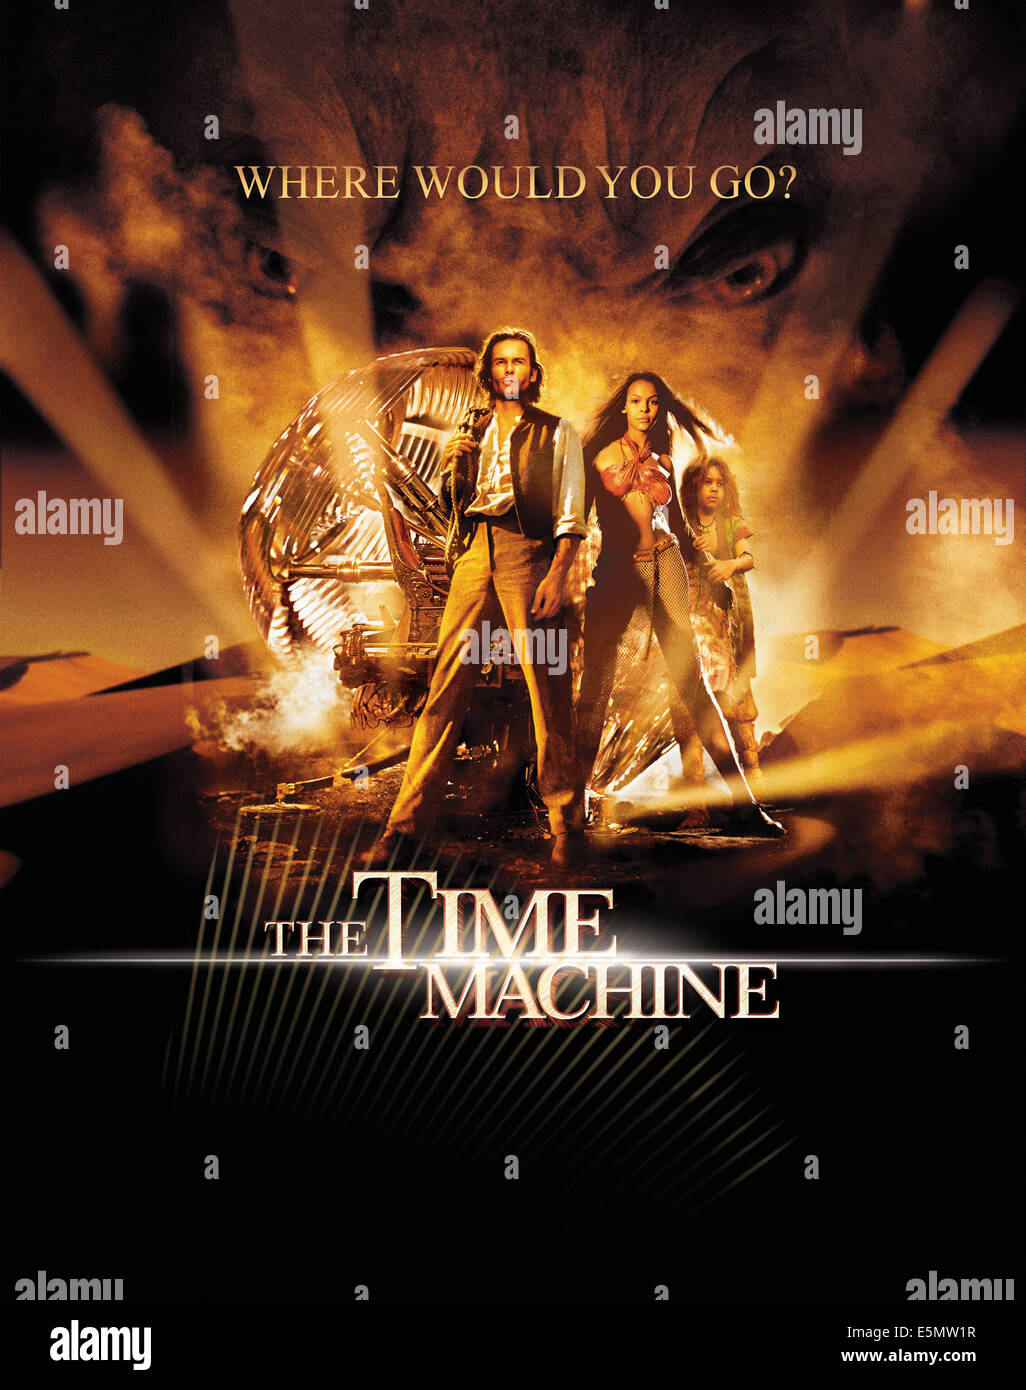 TIME MACHINE, Guy Pearce, Samantha Mumba, 2002  2002 (c) Warner Brothers/courtesy Everett Collection Stock Photo